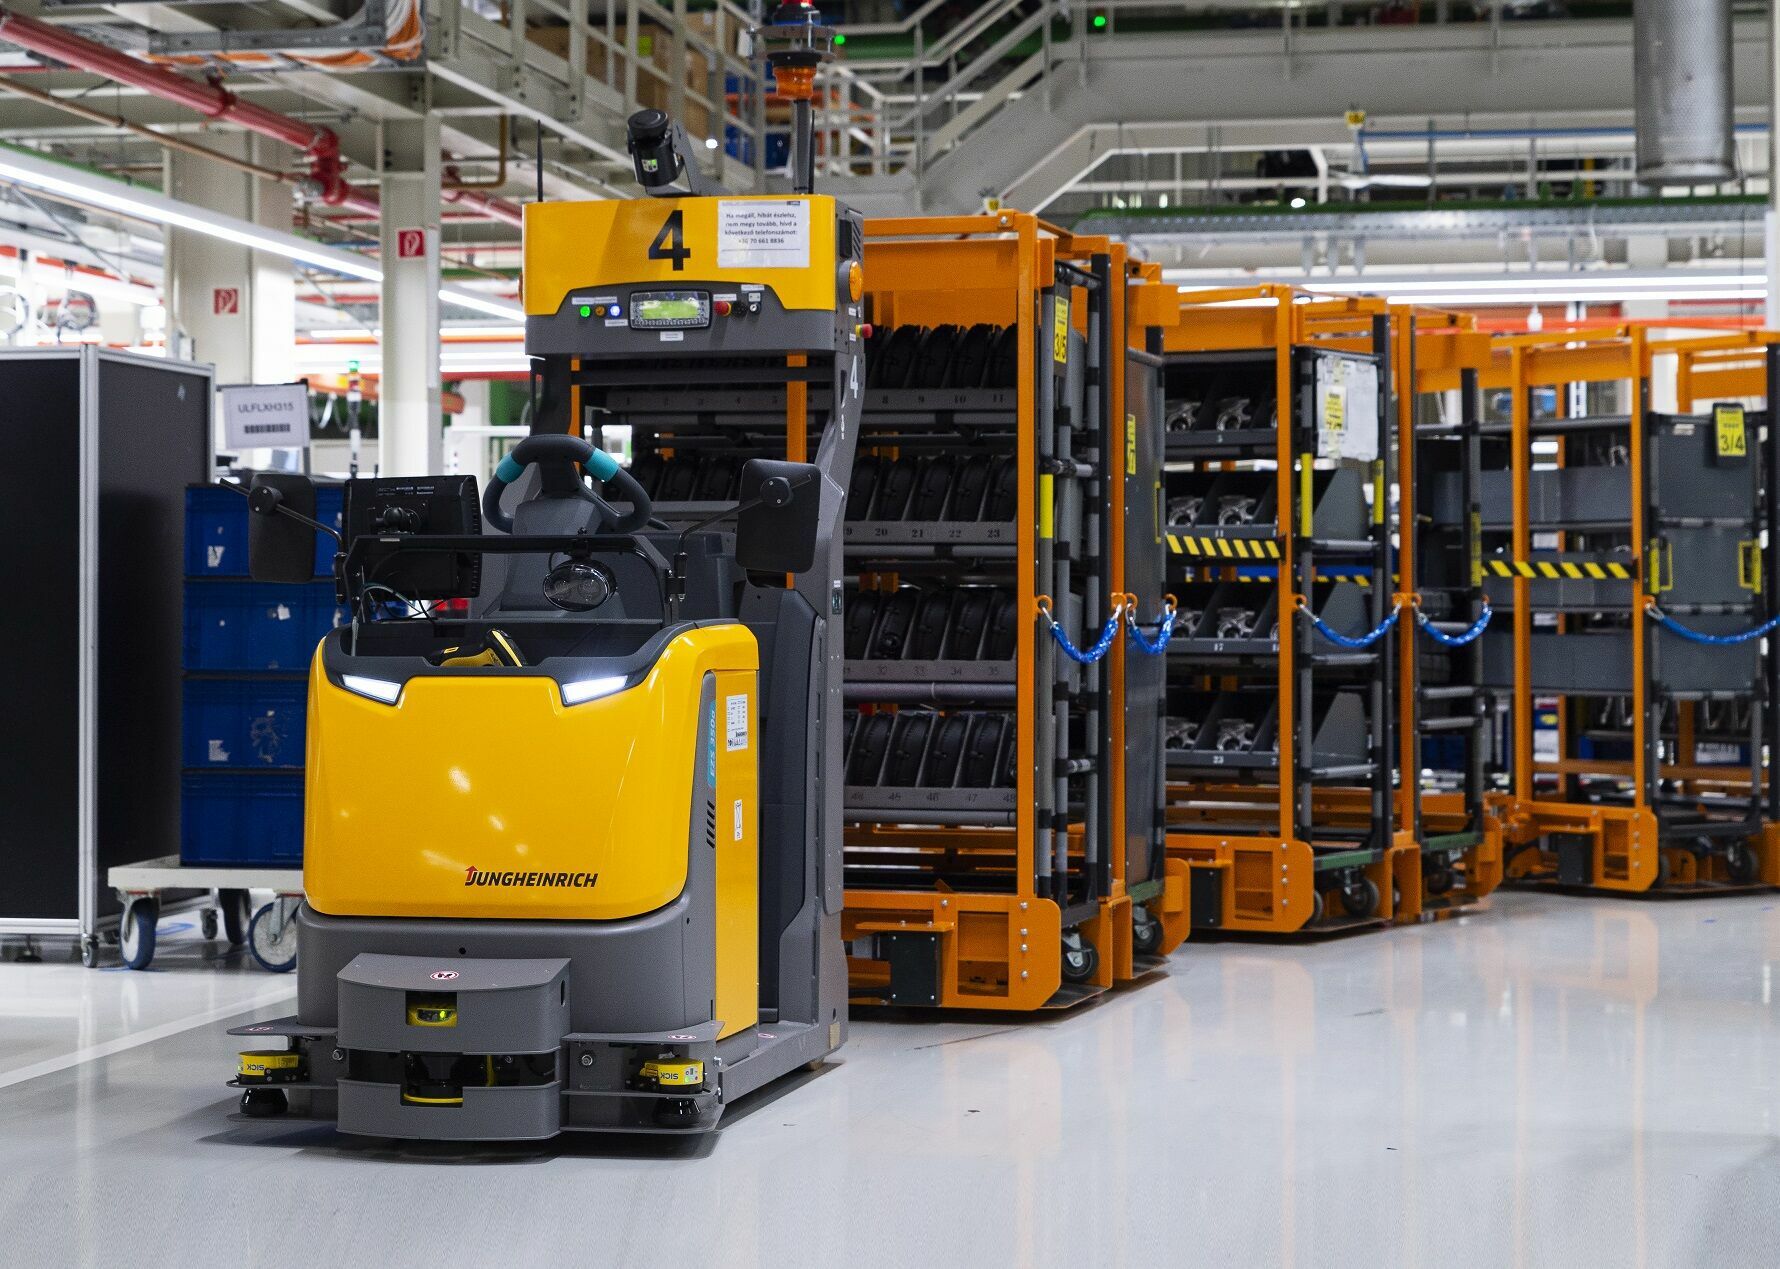 Audi Hungaria: “smart logistics” with driverless transport system